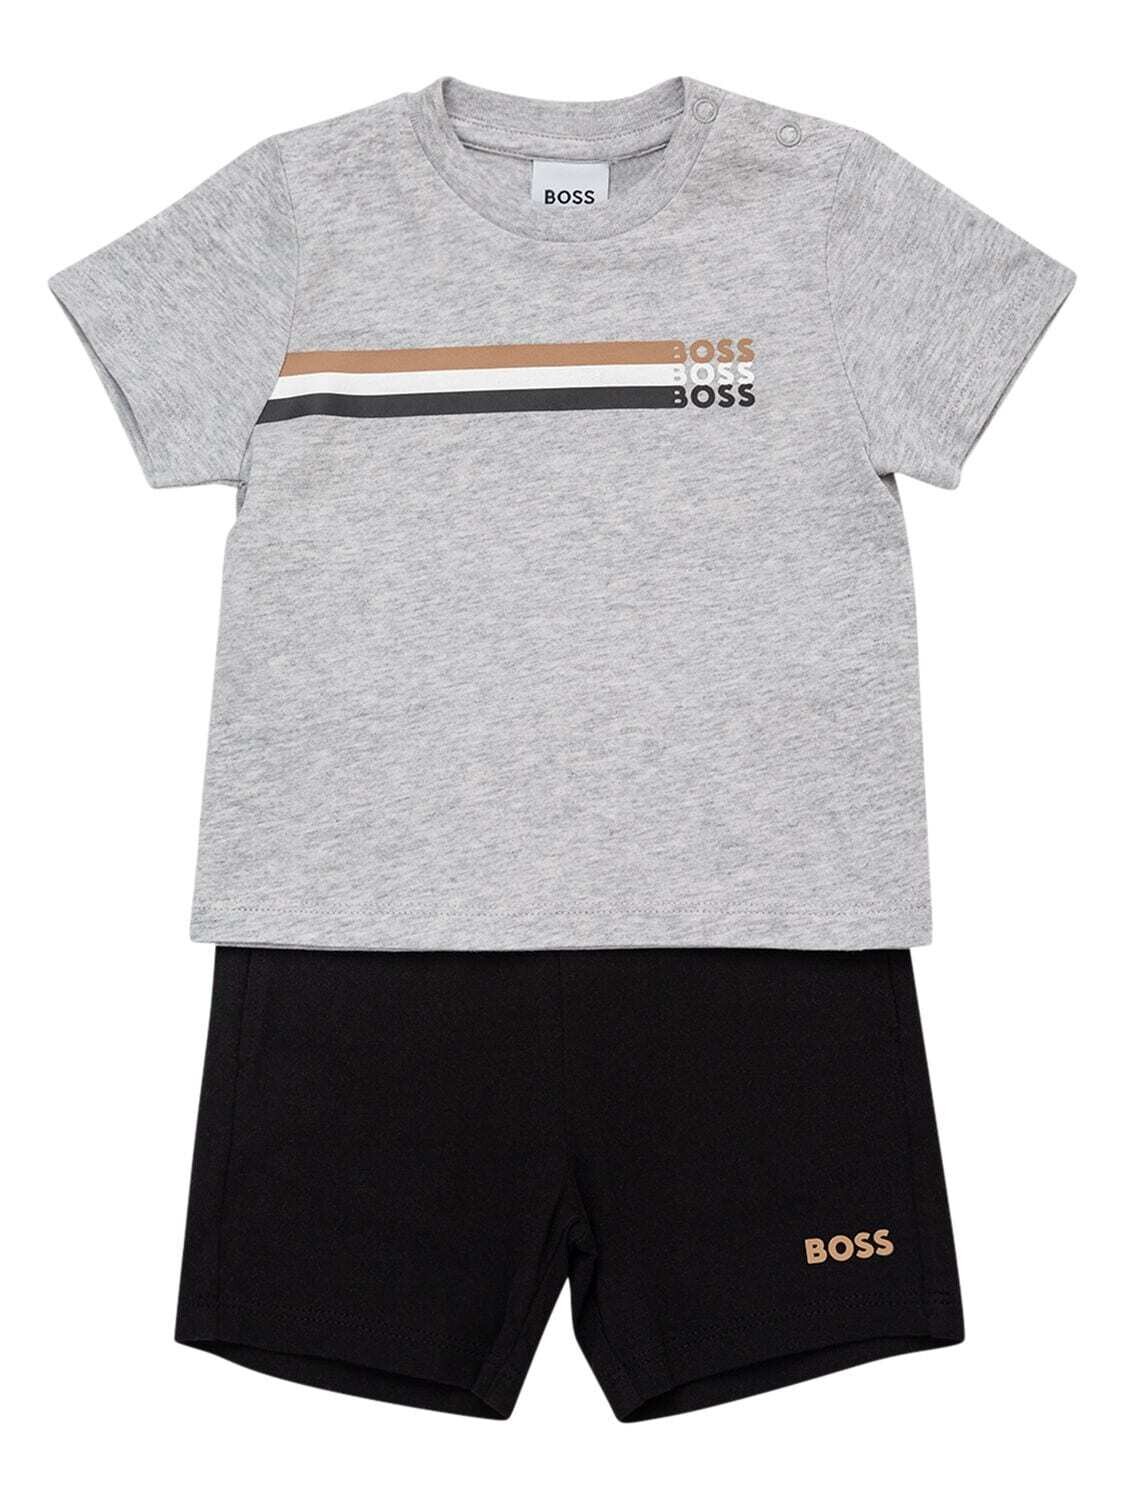 Hugo Boss J08080 Baby Boy's SS T-Shirt & Shorts Set 2PC /CHINE GREY, Size: 6M